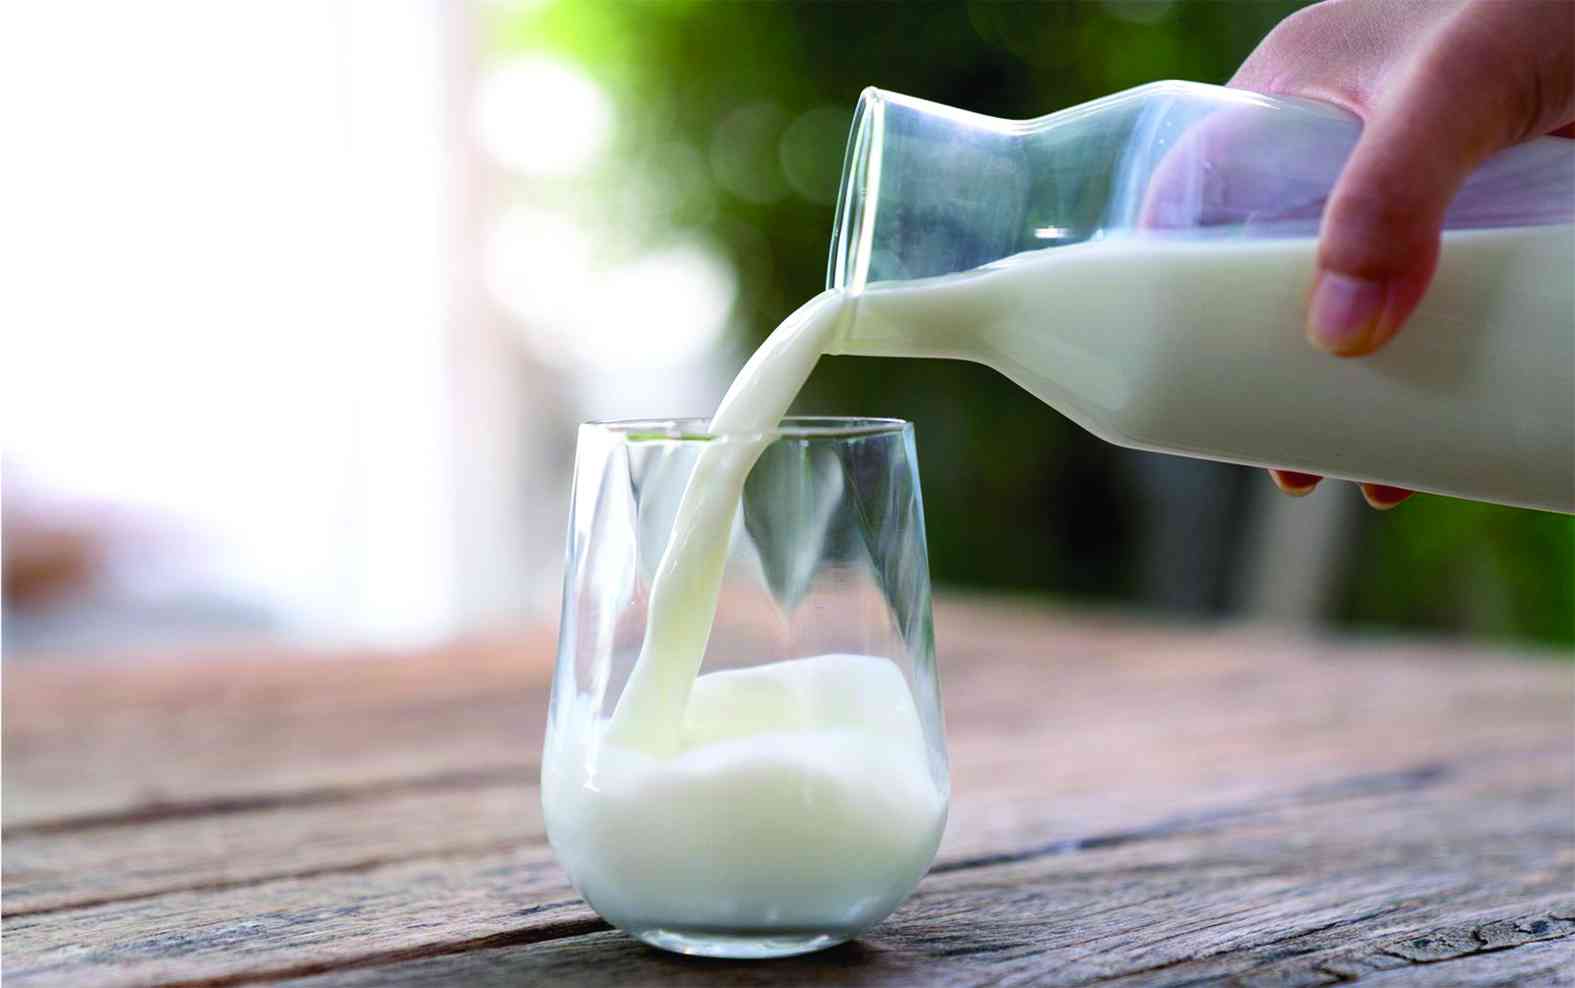 Demand for milk seen softening